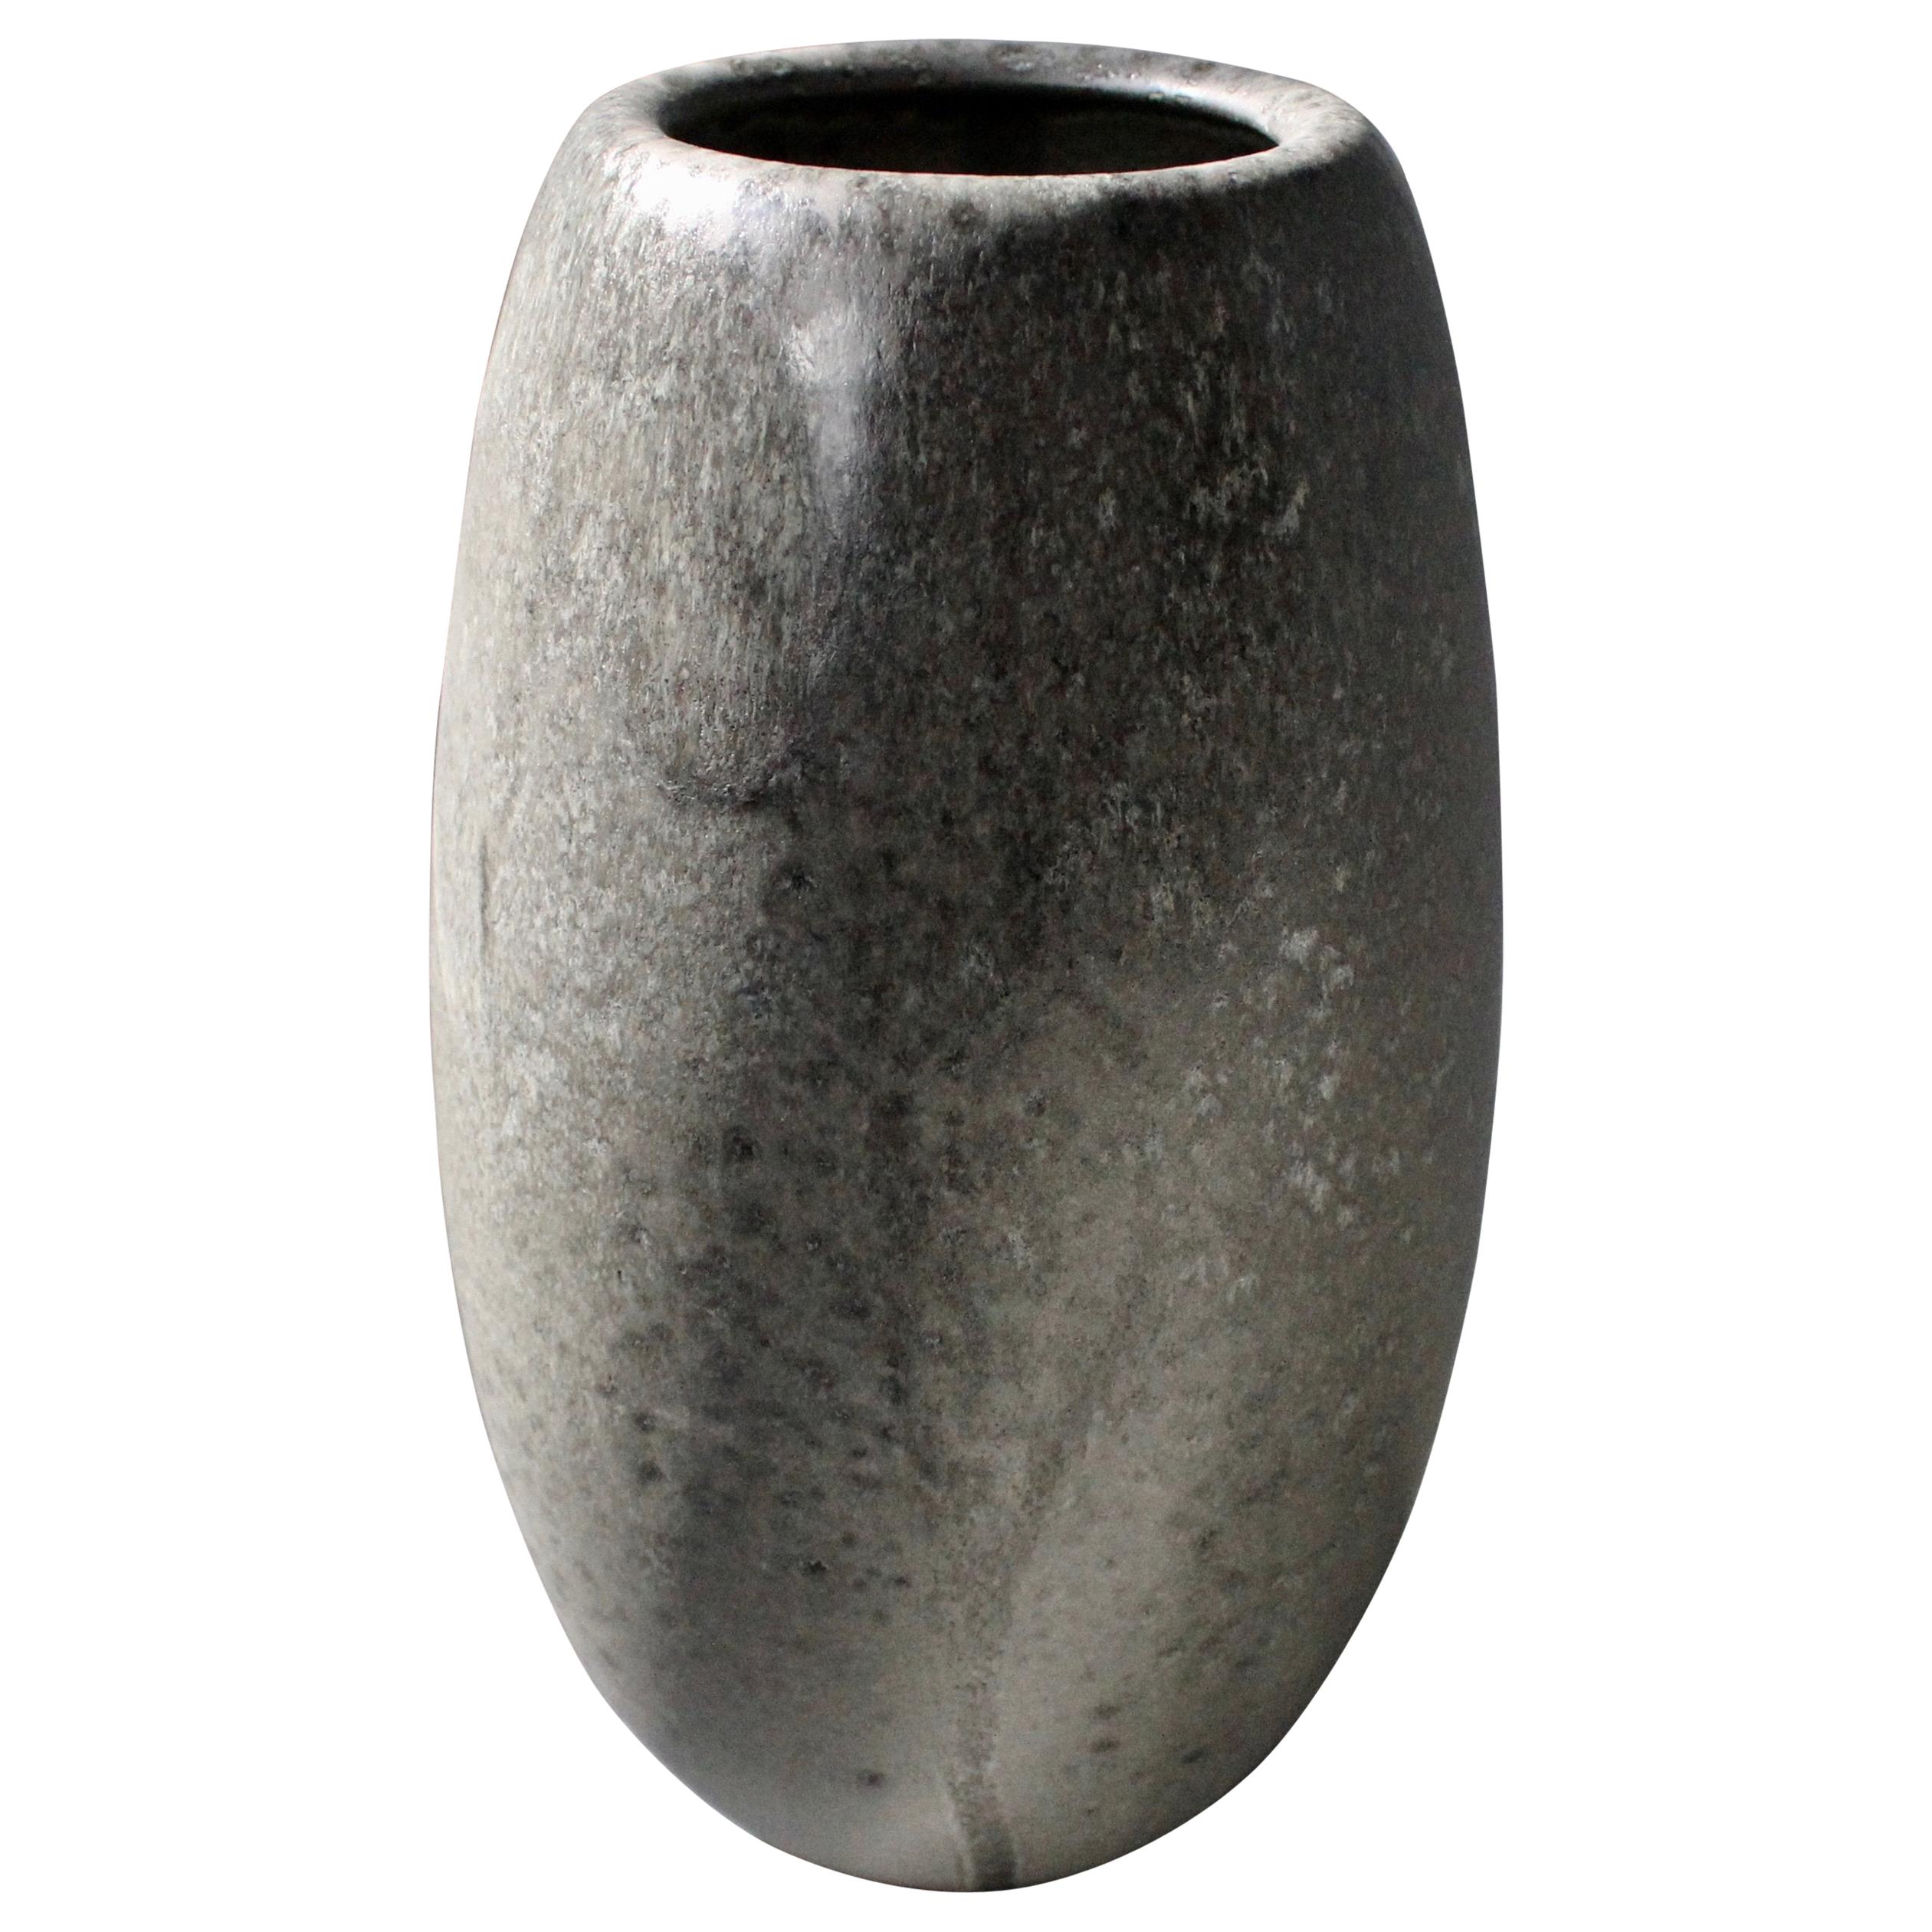 Kasper Würtz Large Ovoid Vase in Granite Glaze